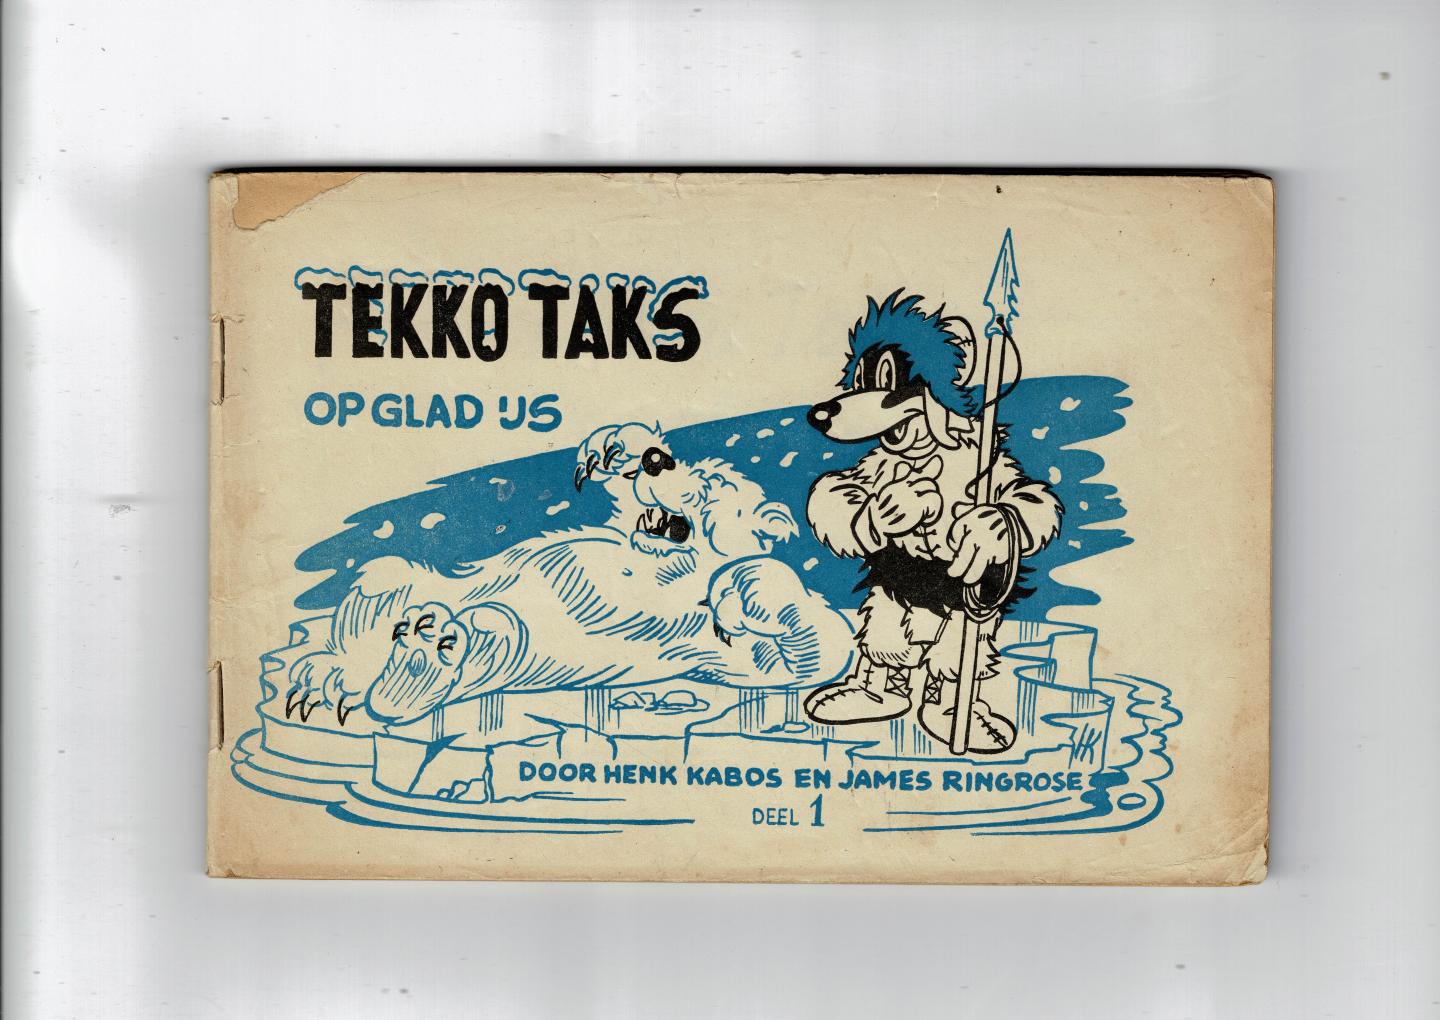 Kabos,Henk,James Ringrose - Tekko Taks deel 1 Tekko Taks op glad ijs